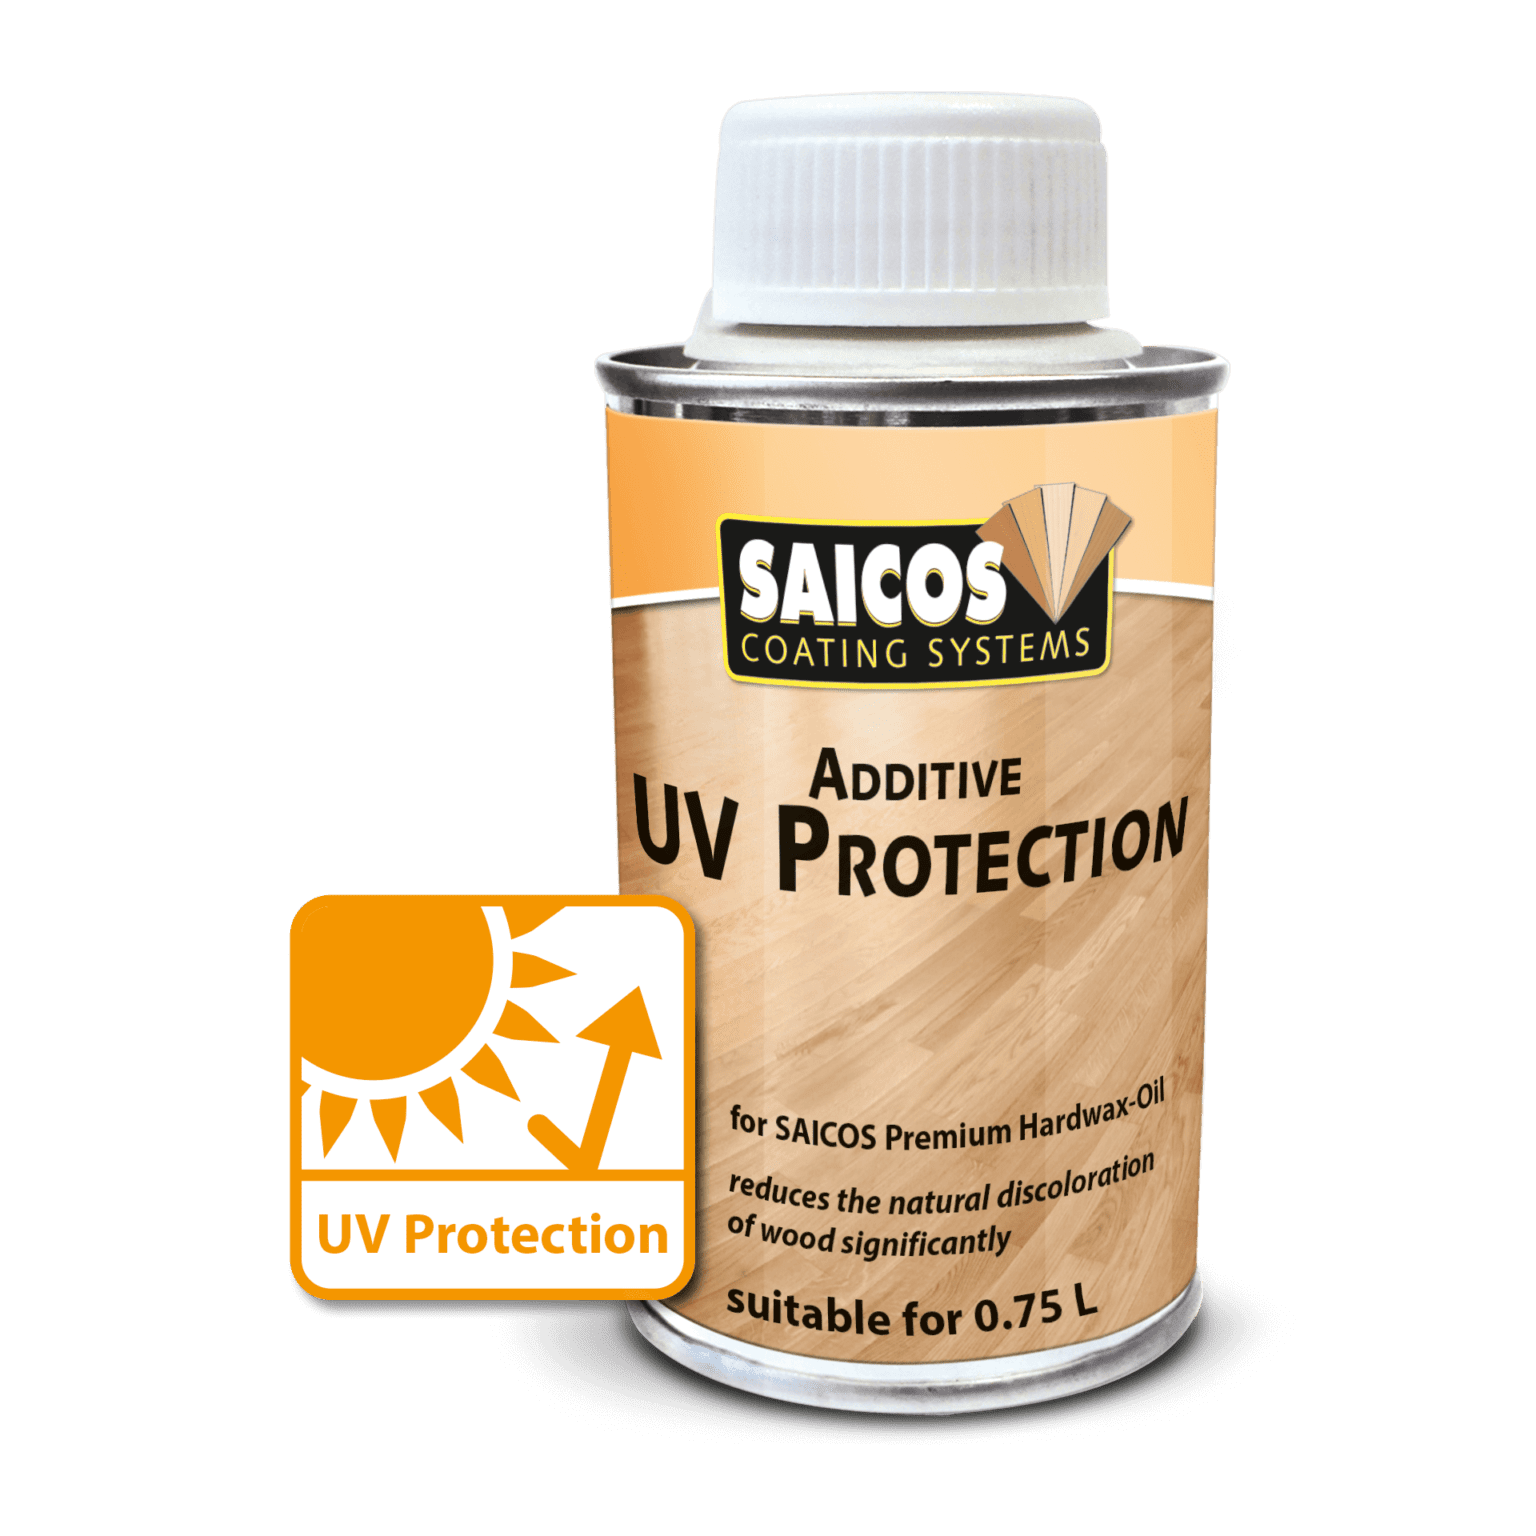 Saicos UV Protection additive